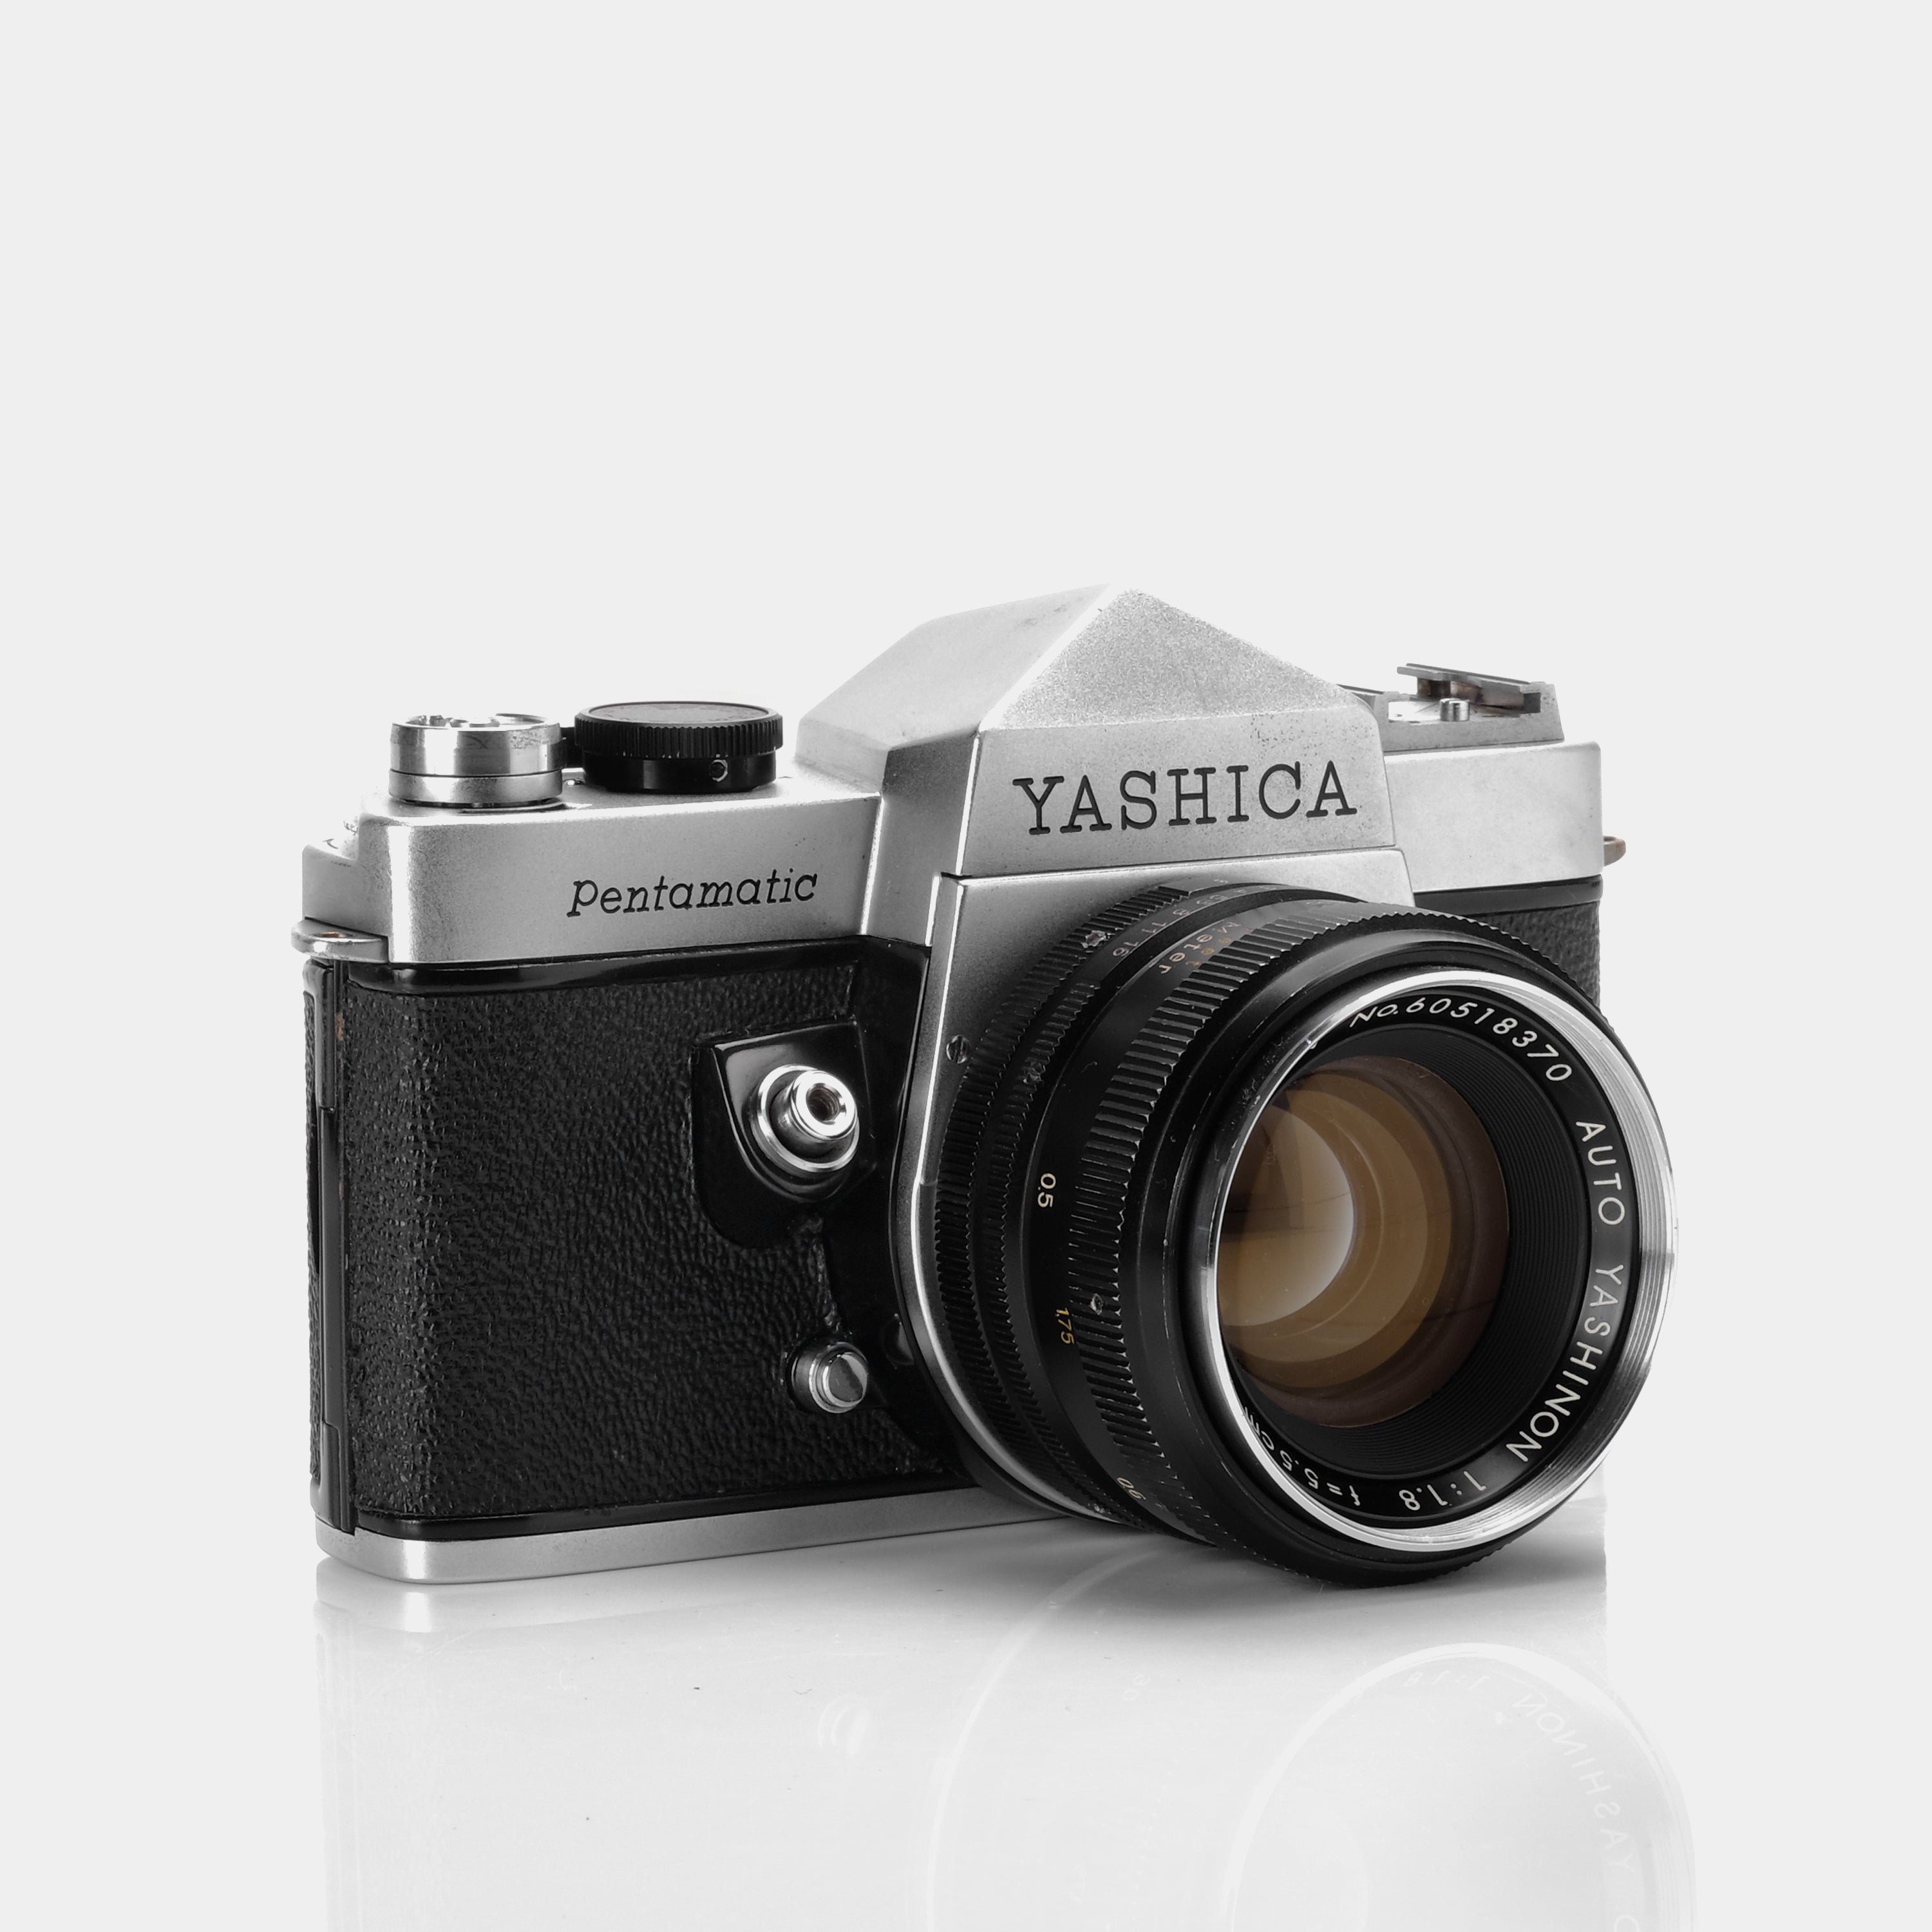 Yashica Pentamatic 35mm SLR Film Camera